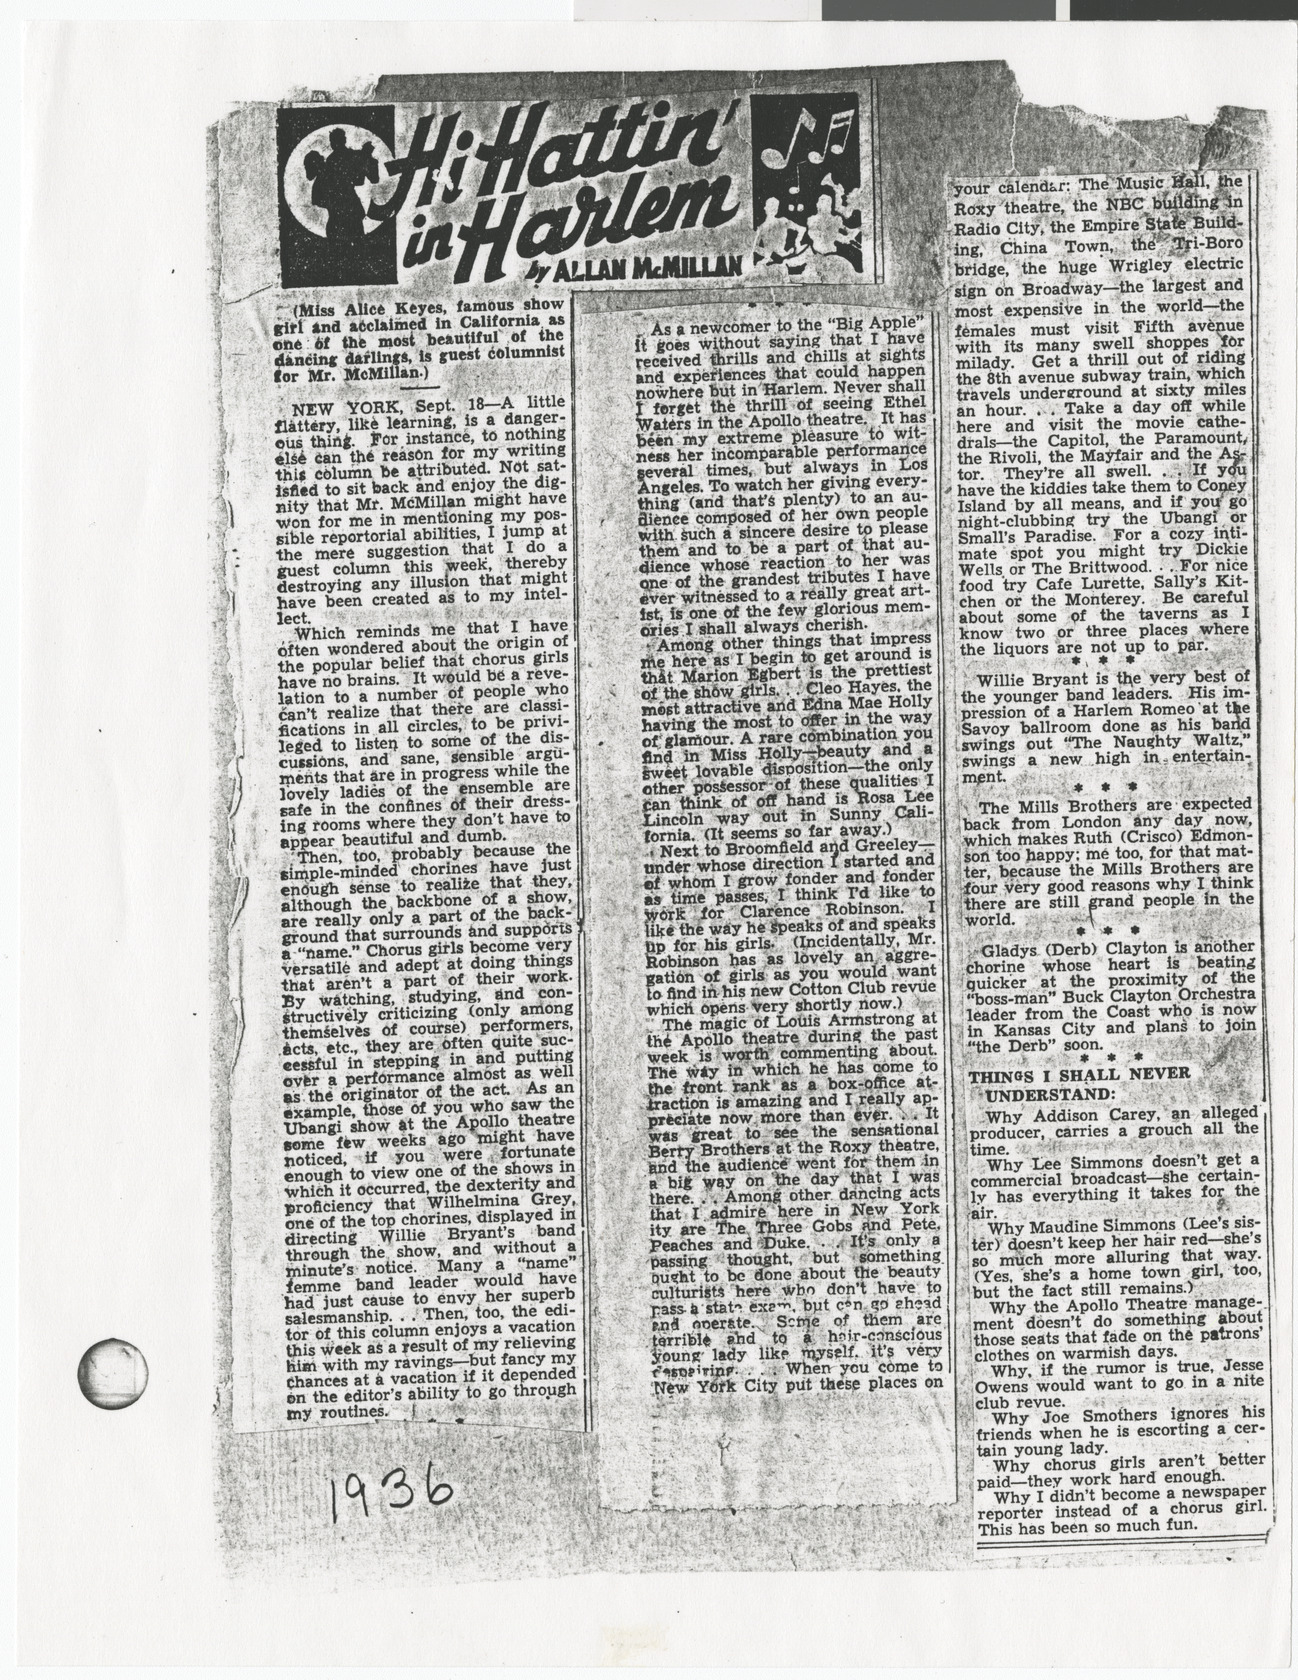 Newspaper clipping (copy), Hi Hattin' in Harlem by Allan McMillan, publication unknown, 1936